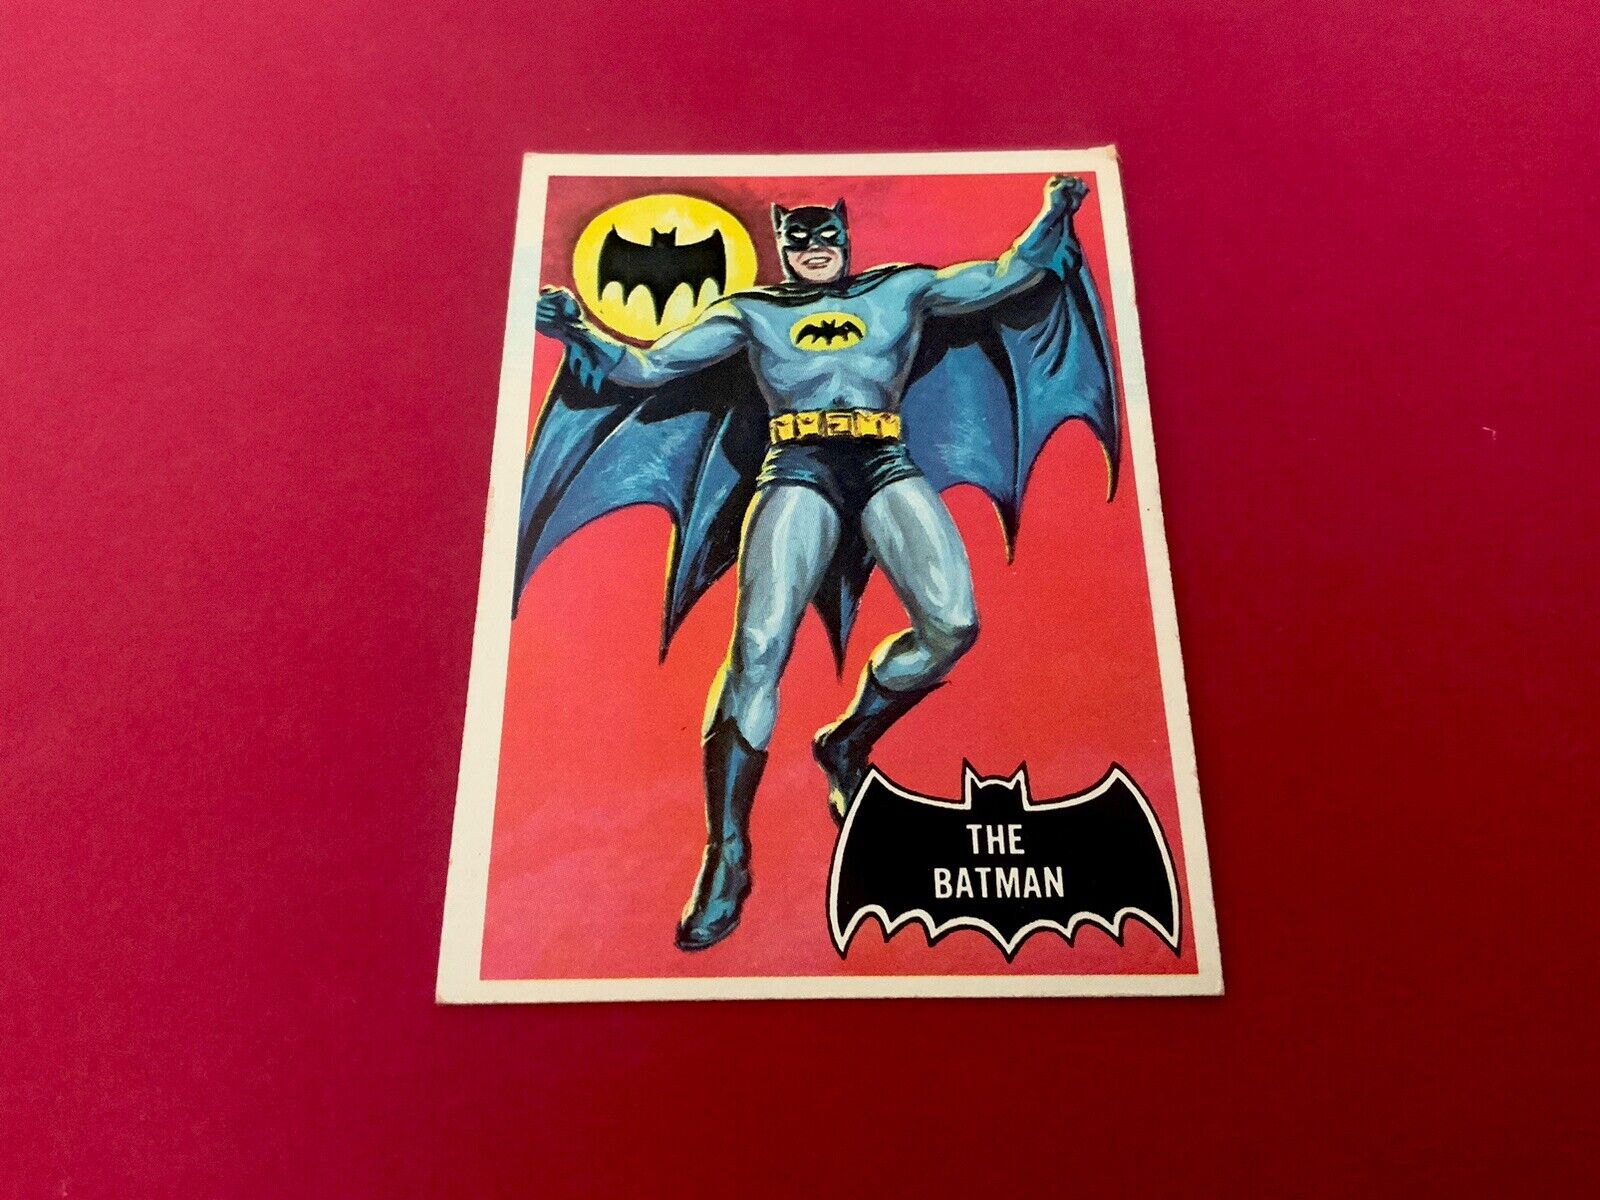 1966 Topps Batman Black Bat Card # 1 THE BATMAN - Very Good Condition